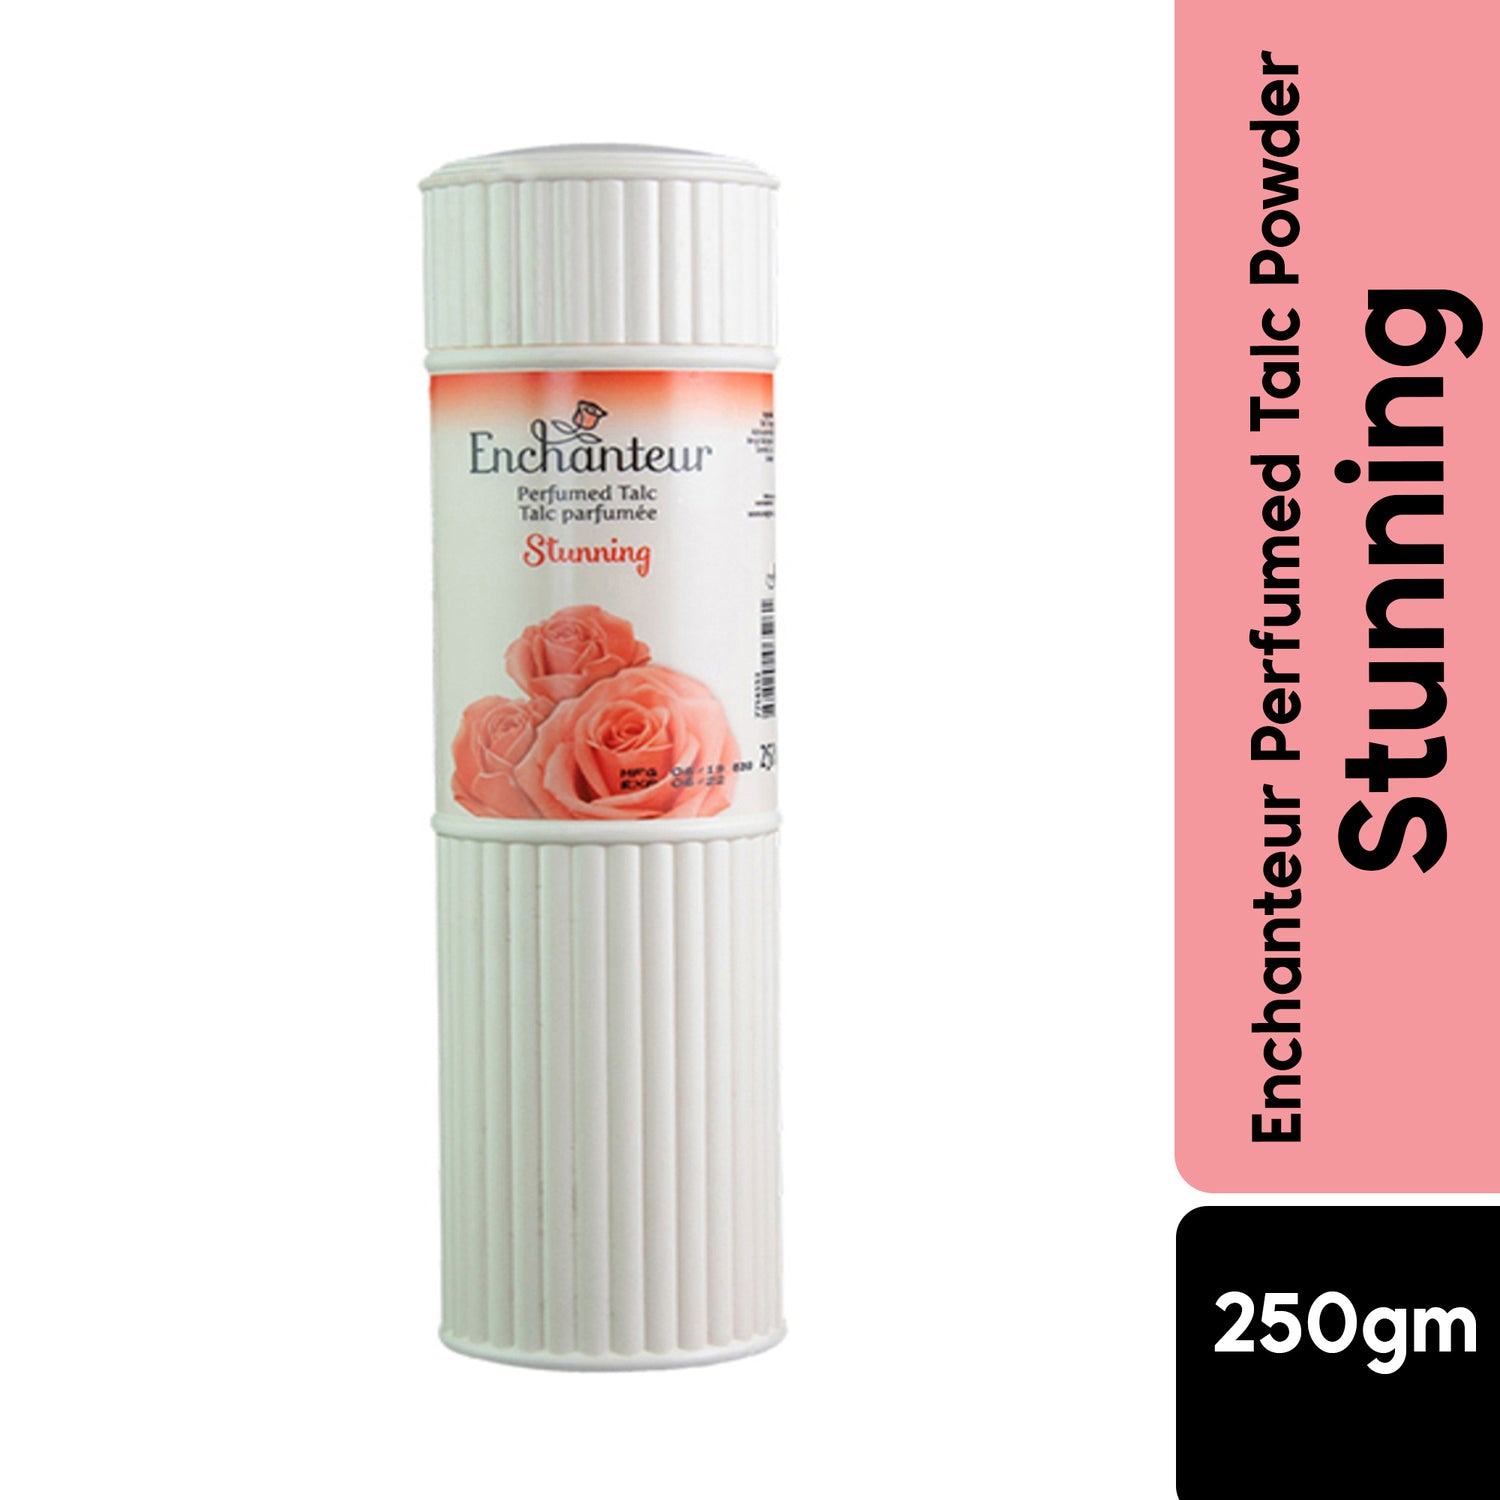 Enchanteur Perfumed Talc Powder (250gm)